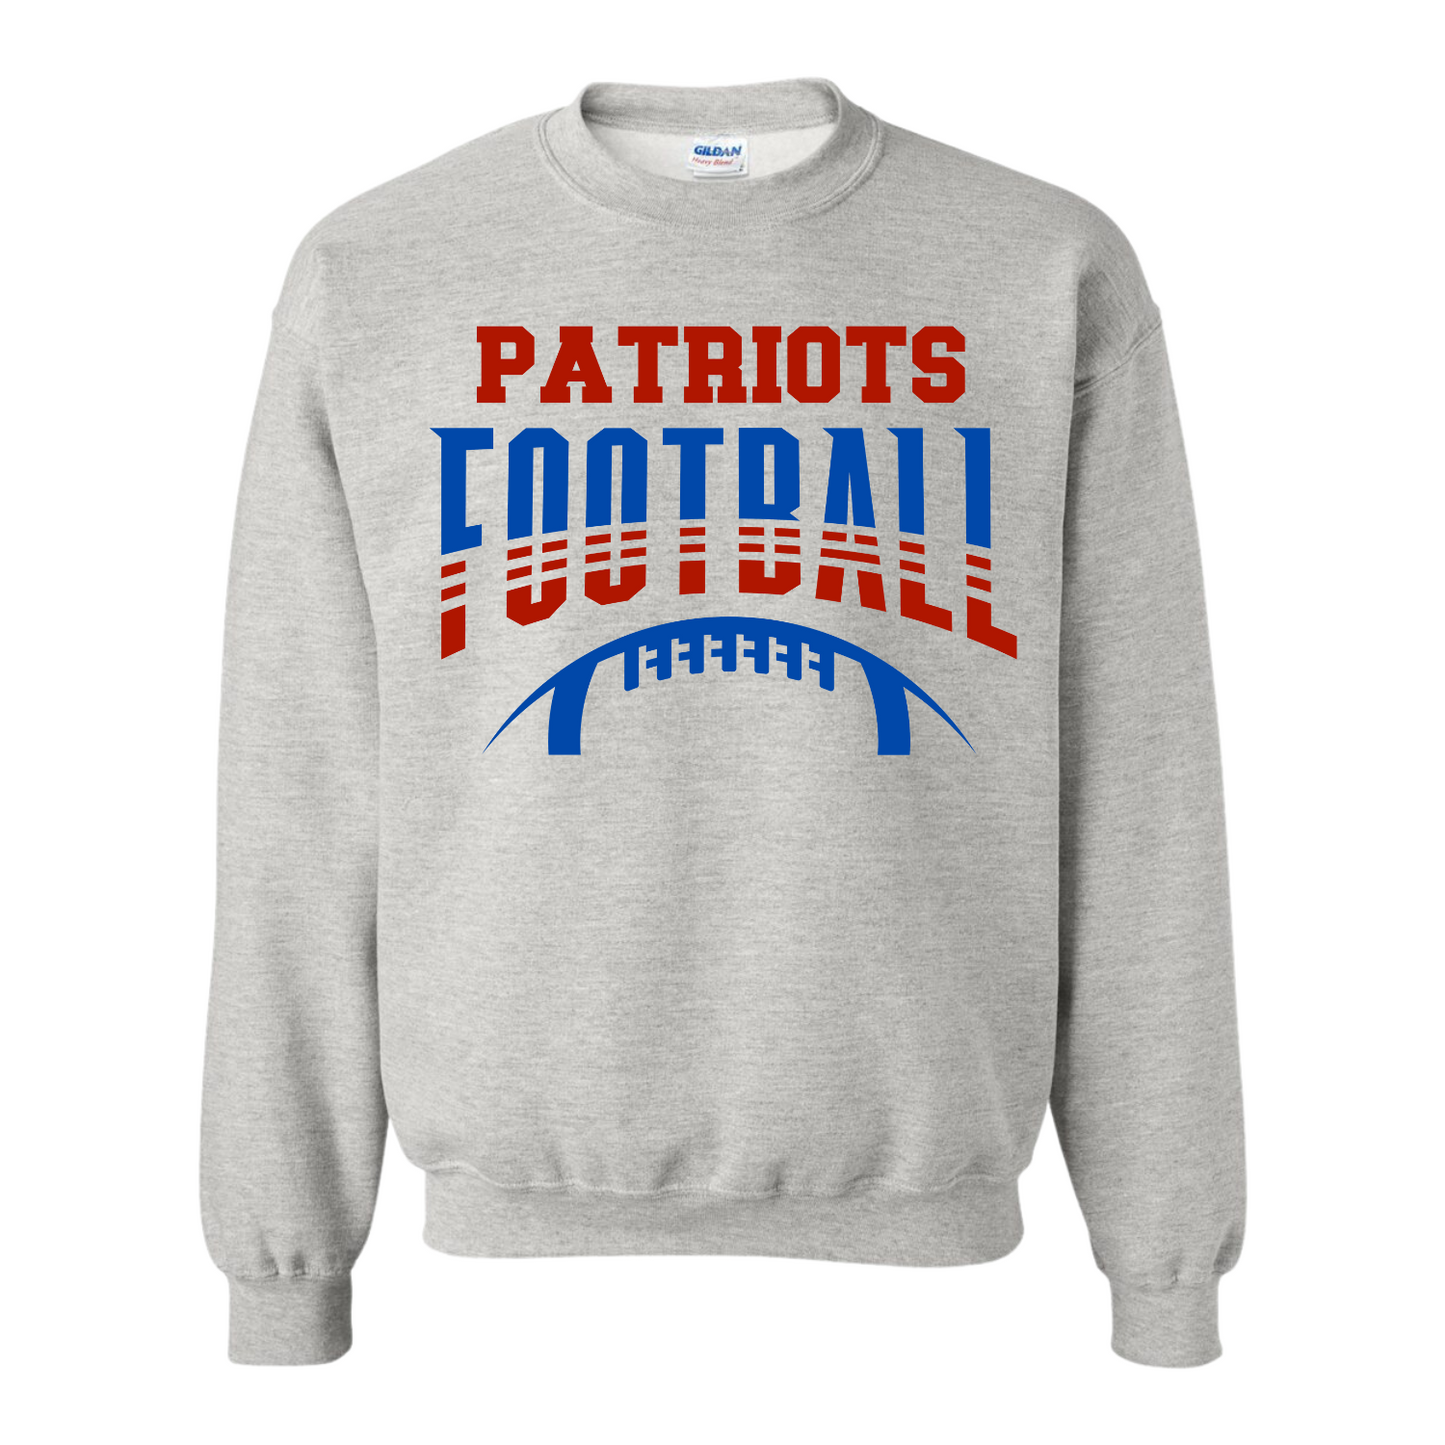 Patriots Football Sweatshirt